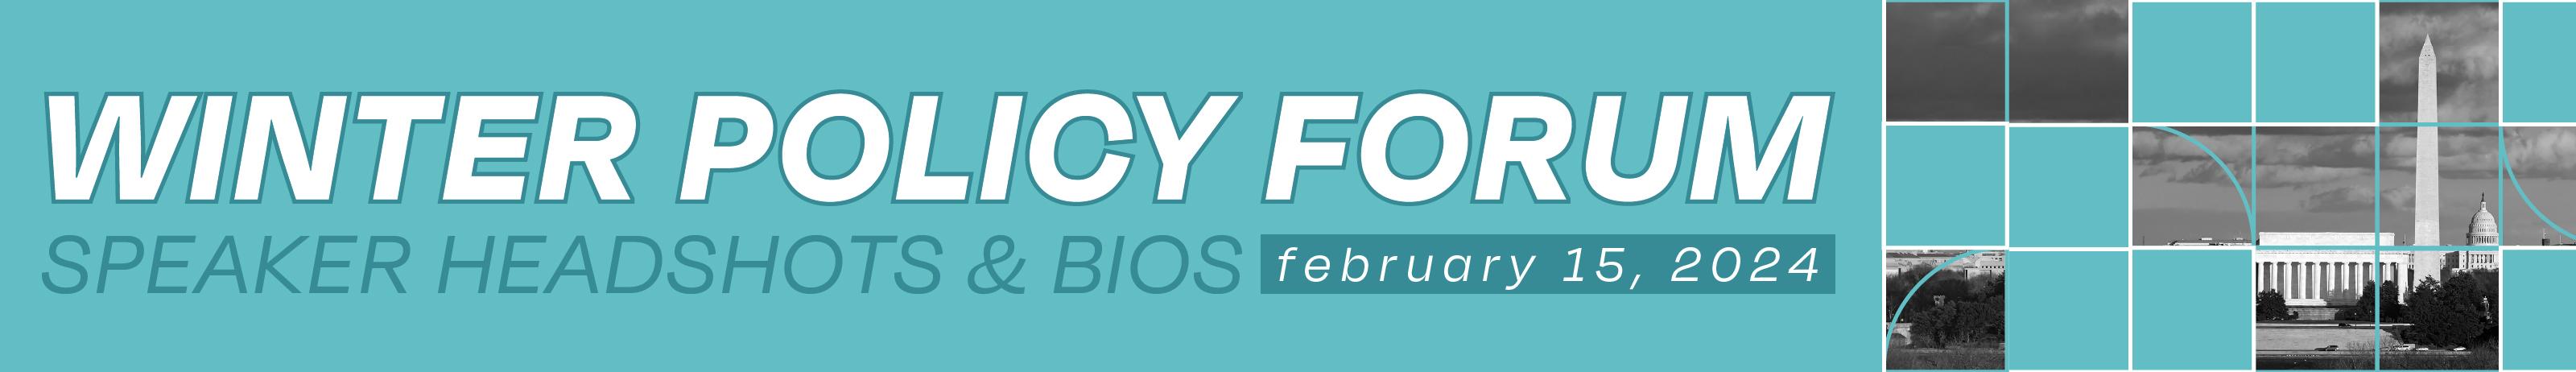 2024 Winter Policy Forum Speaker Headshots & Bios